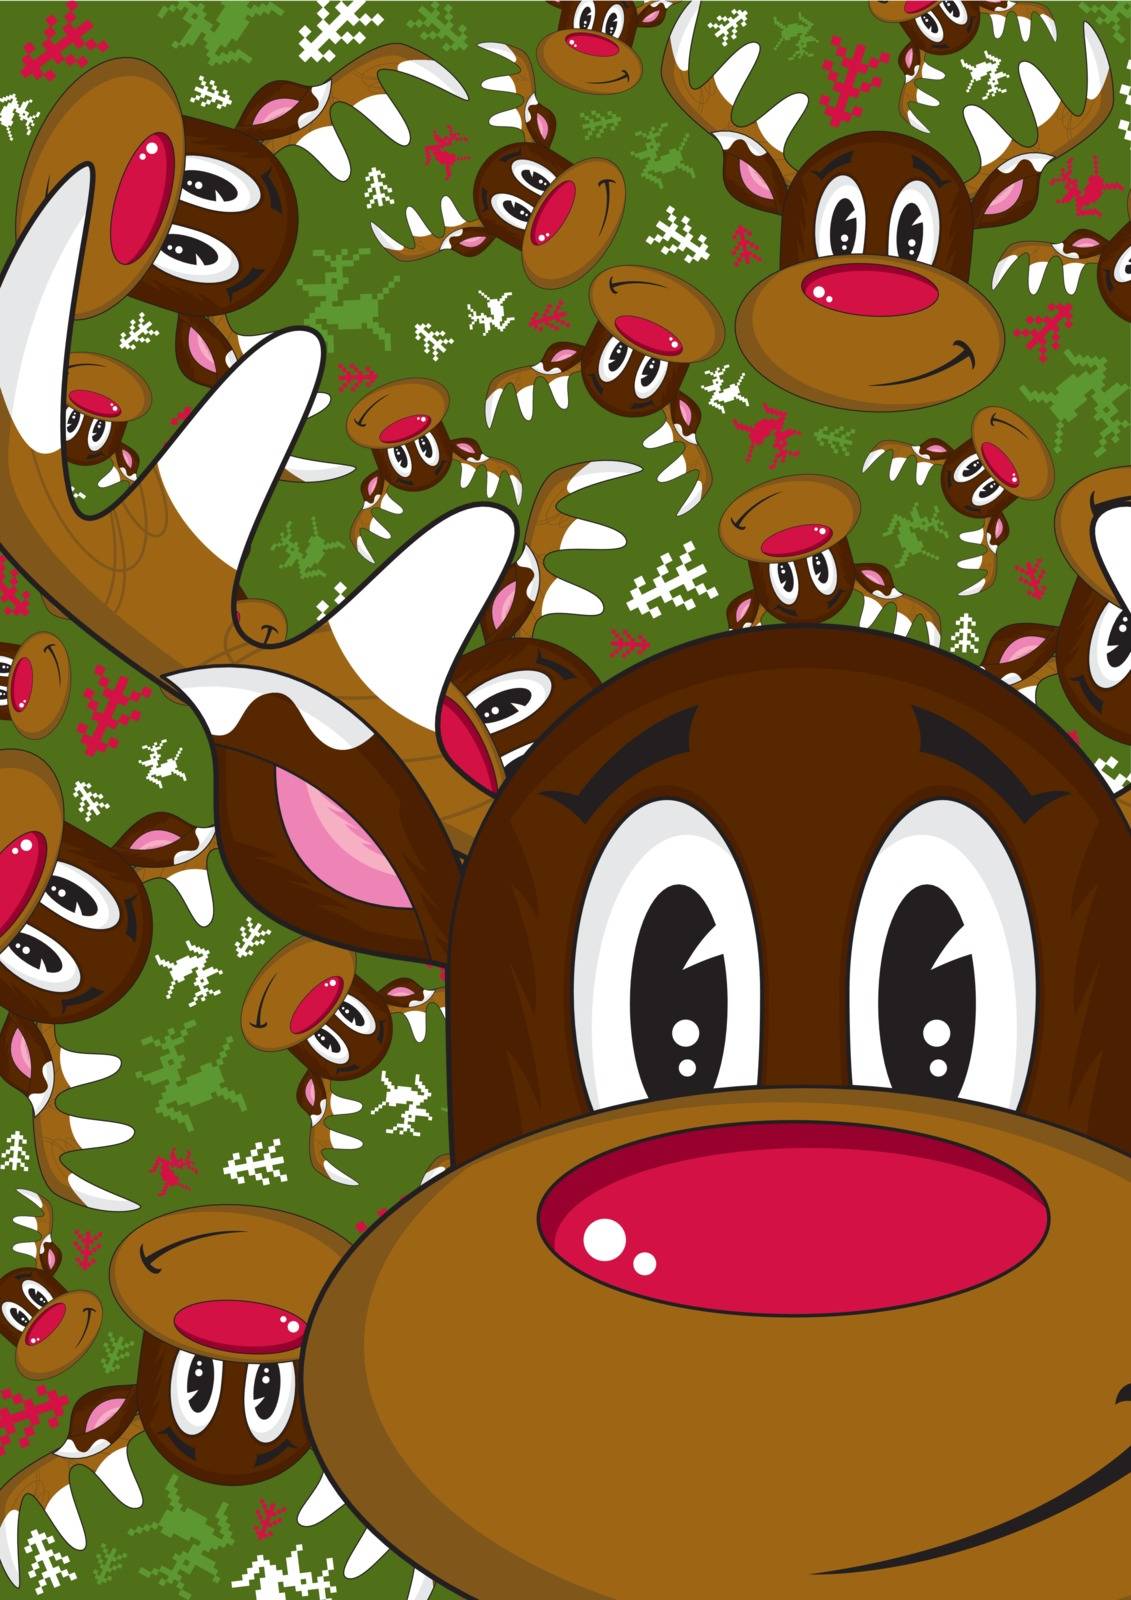 Cartoon Rudolph the Reindeer by markmurphycreative